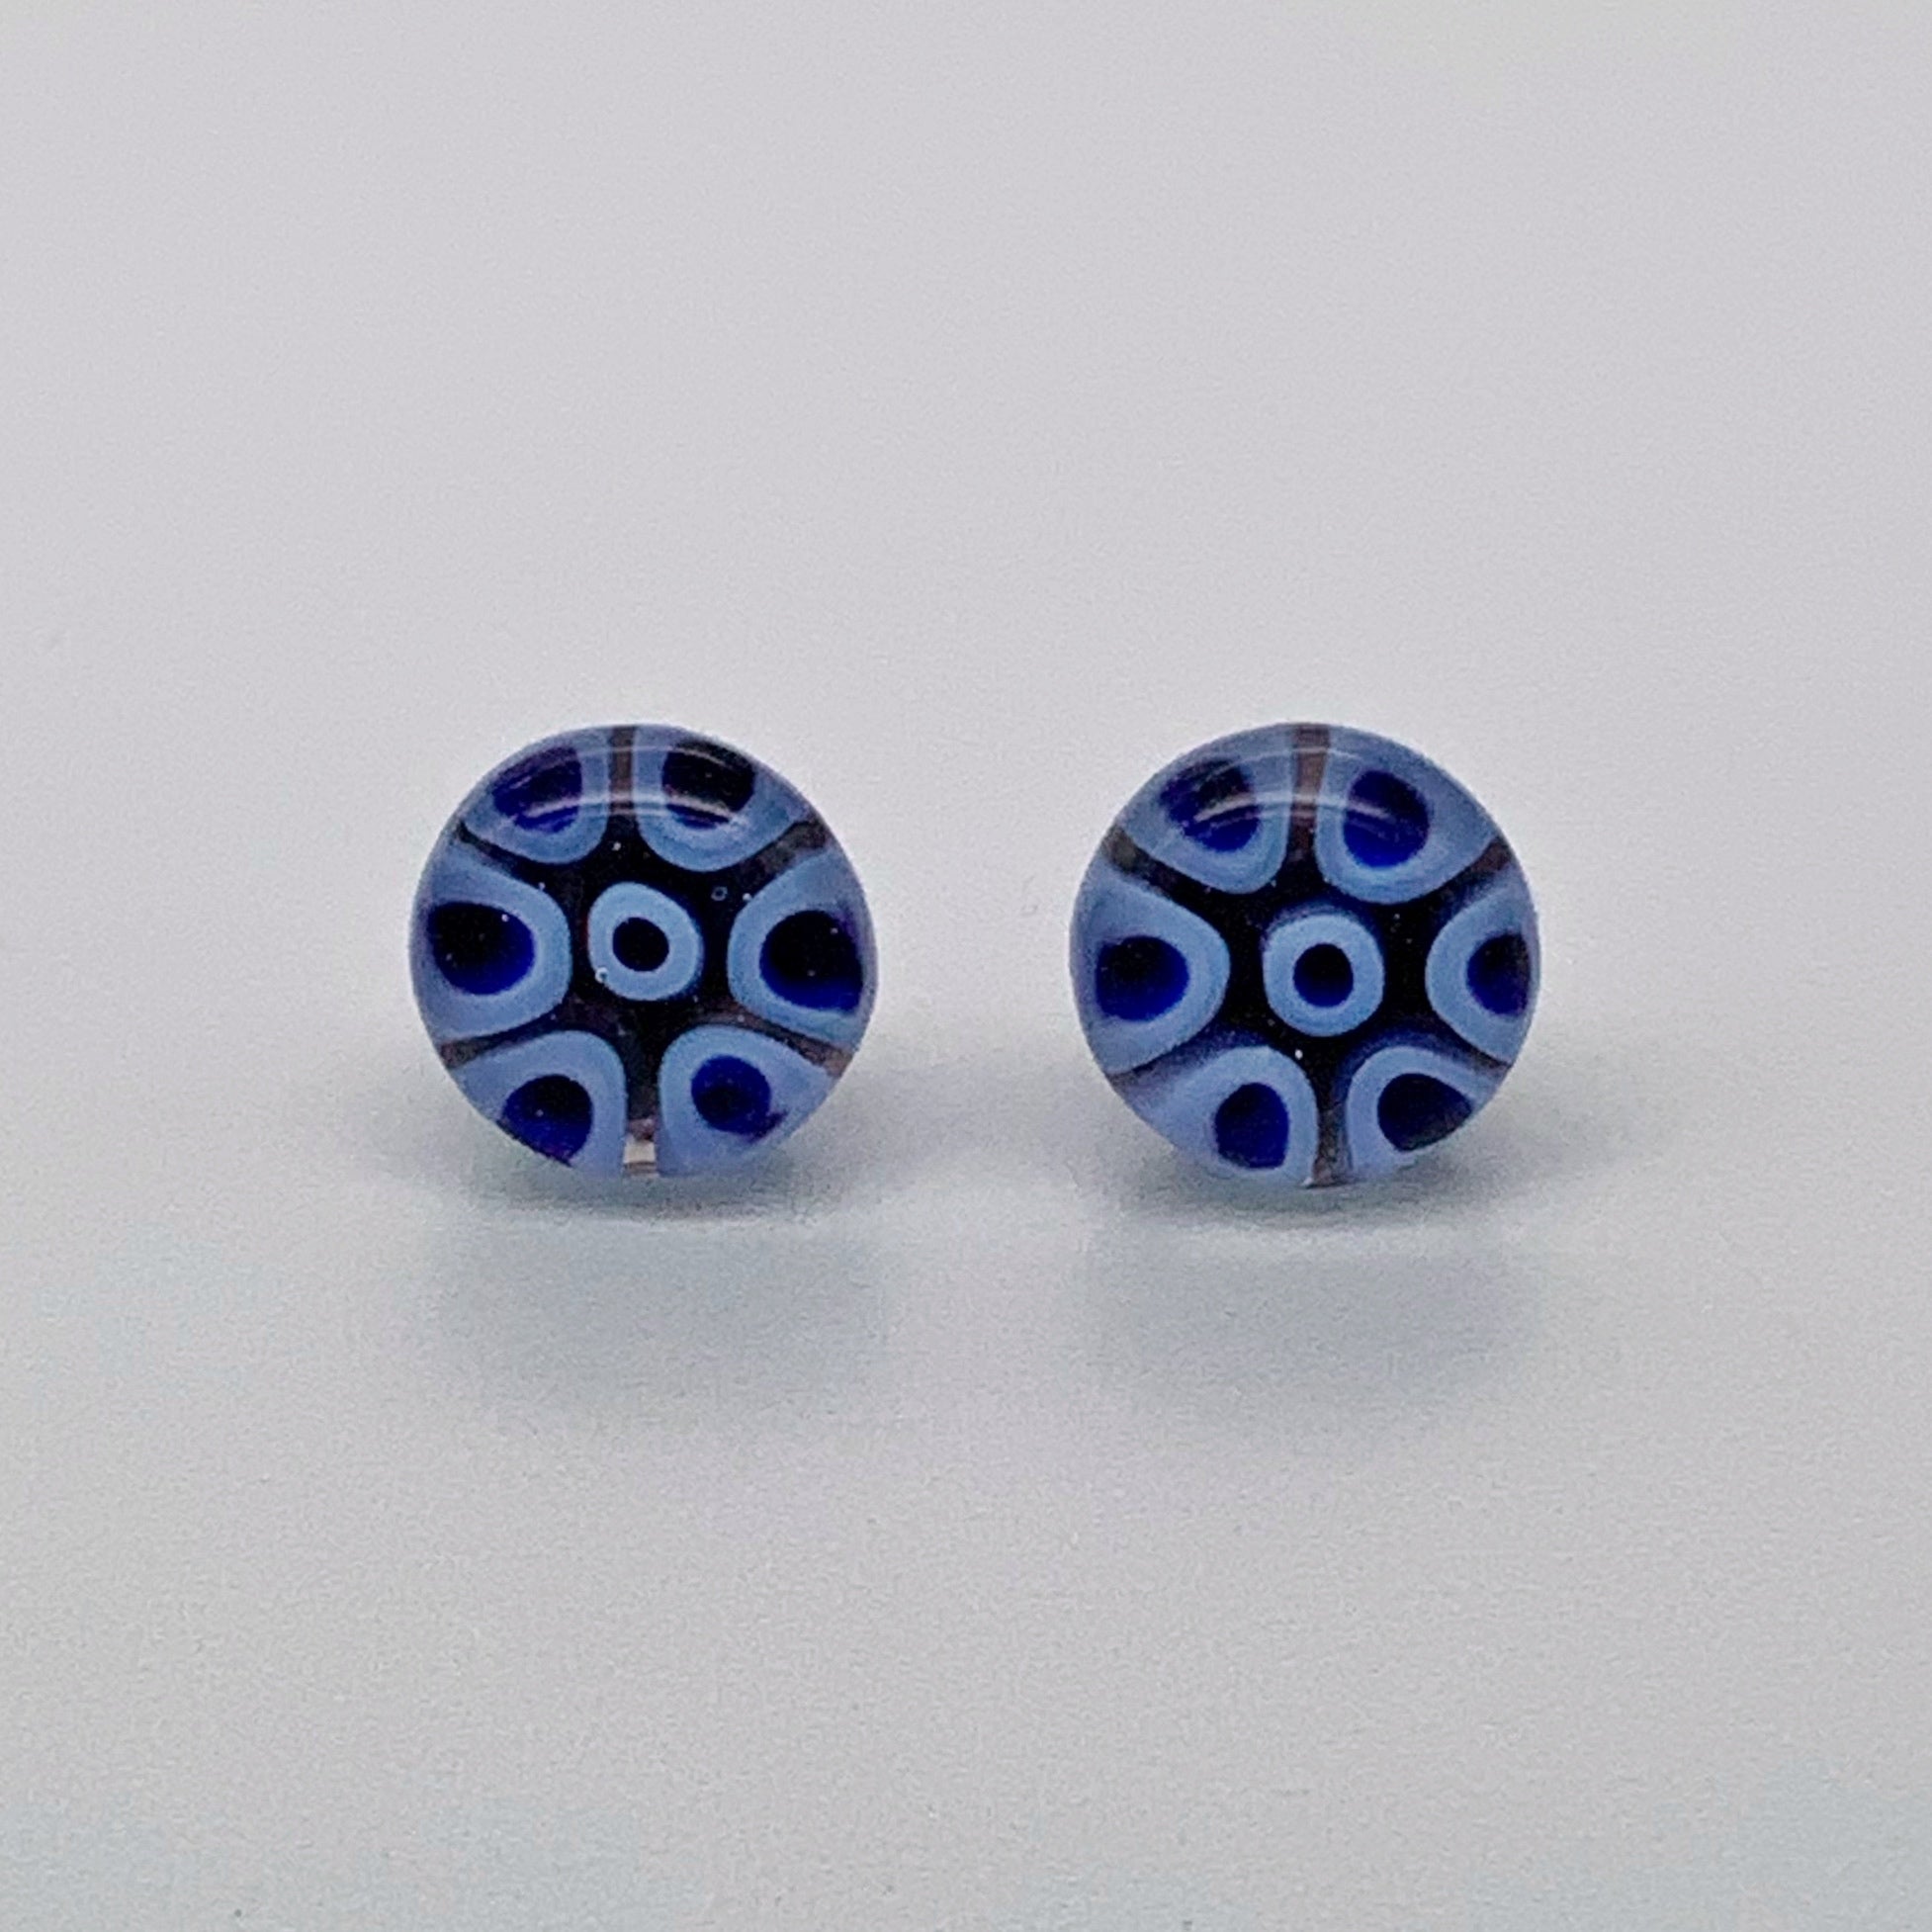 Fused murrini stud earrings in blue caviar